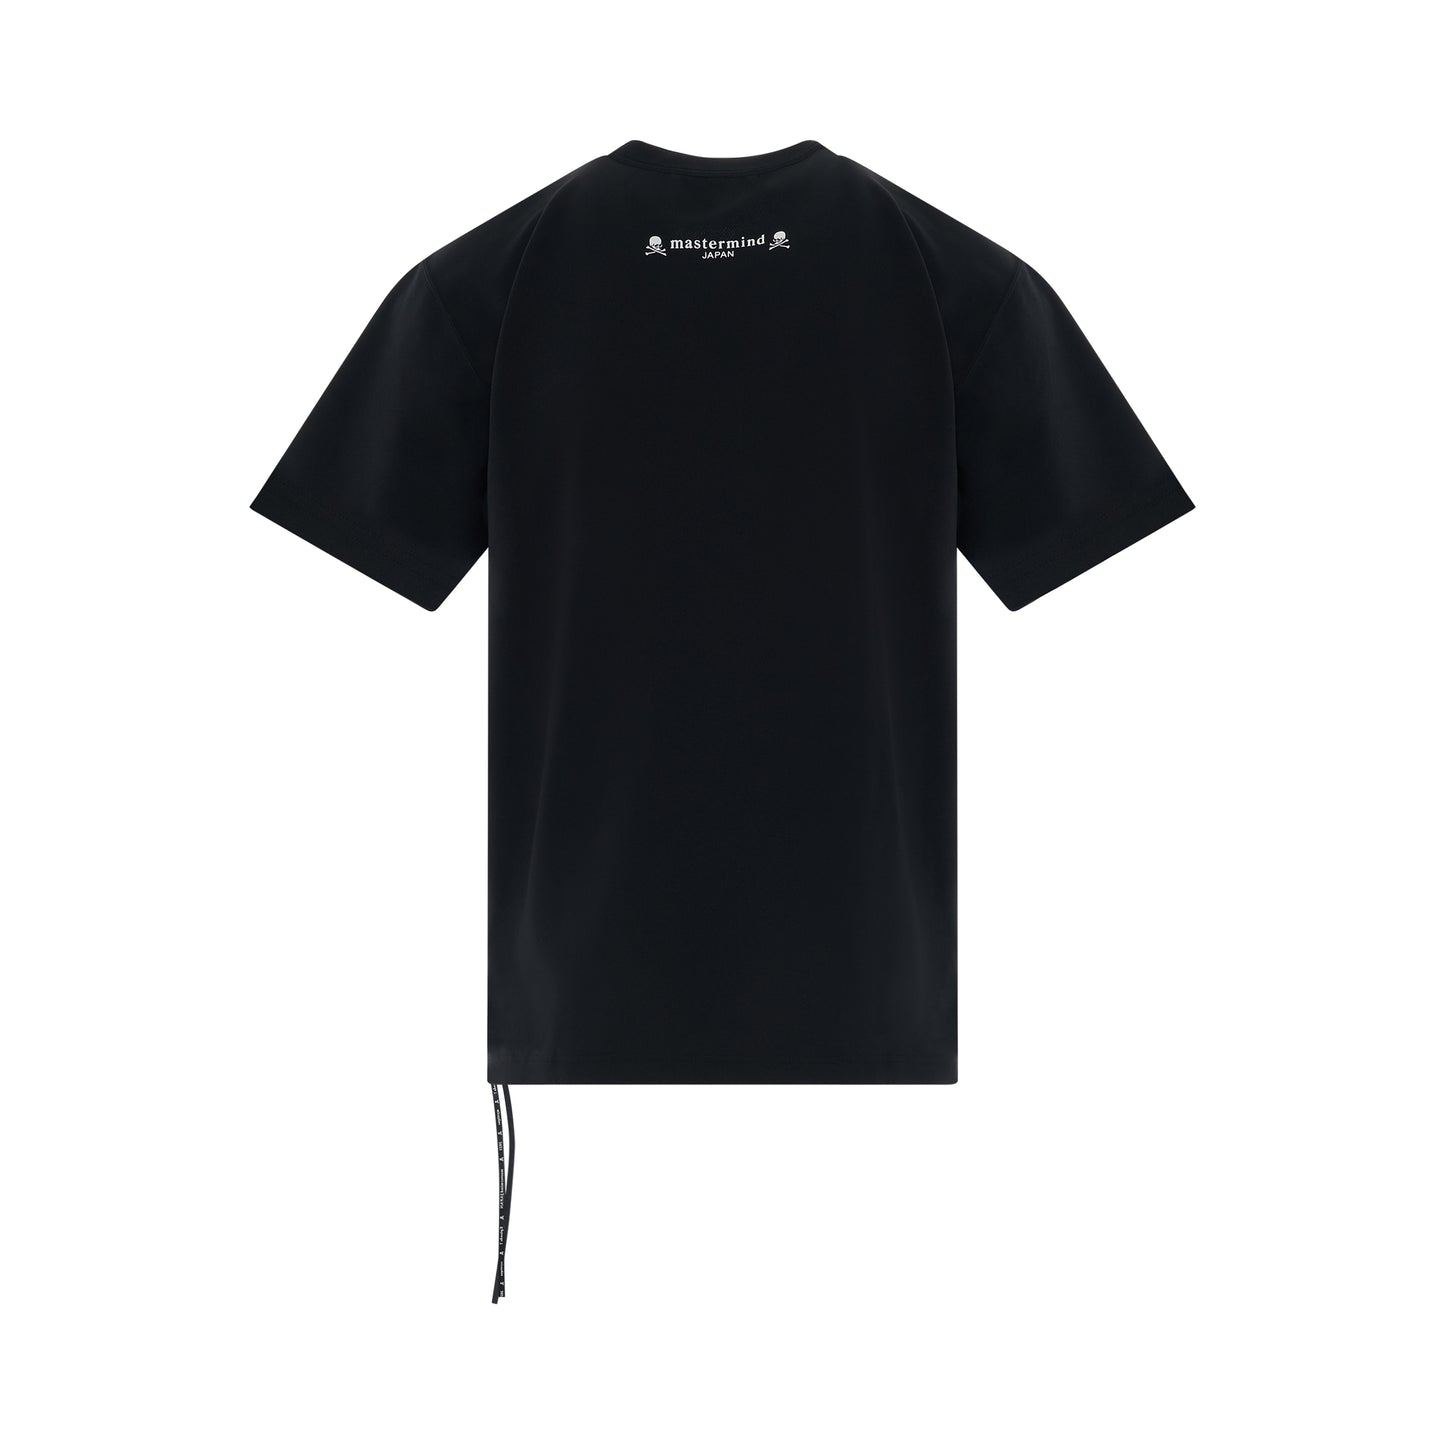 Slicone Skull On Pocket T-Shirt in Black